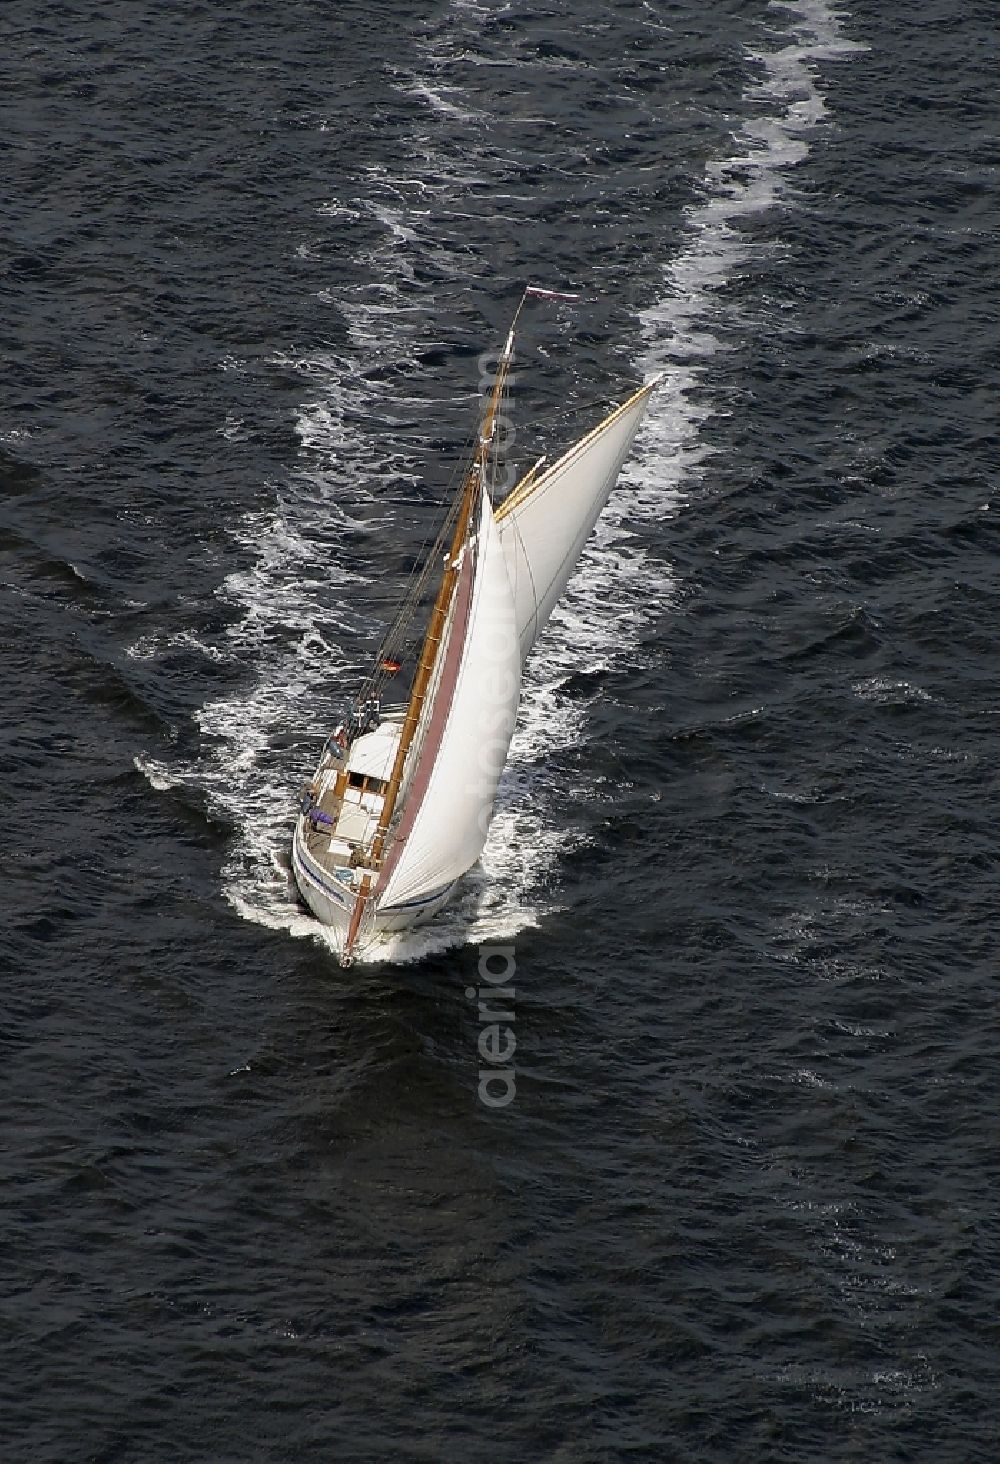 Aerial photograph Flensburger Förde - Sailboat under way in Flensburg Fjord in Schleswig-Holstein